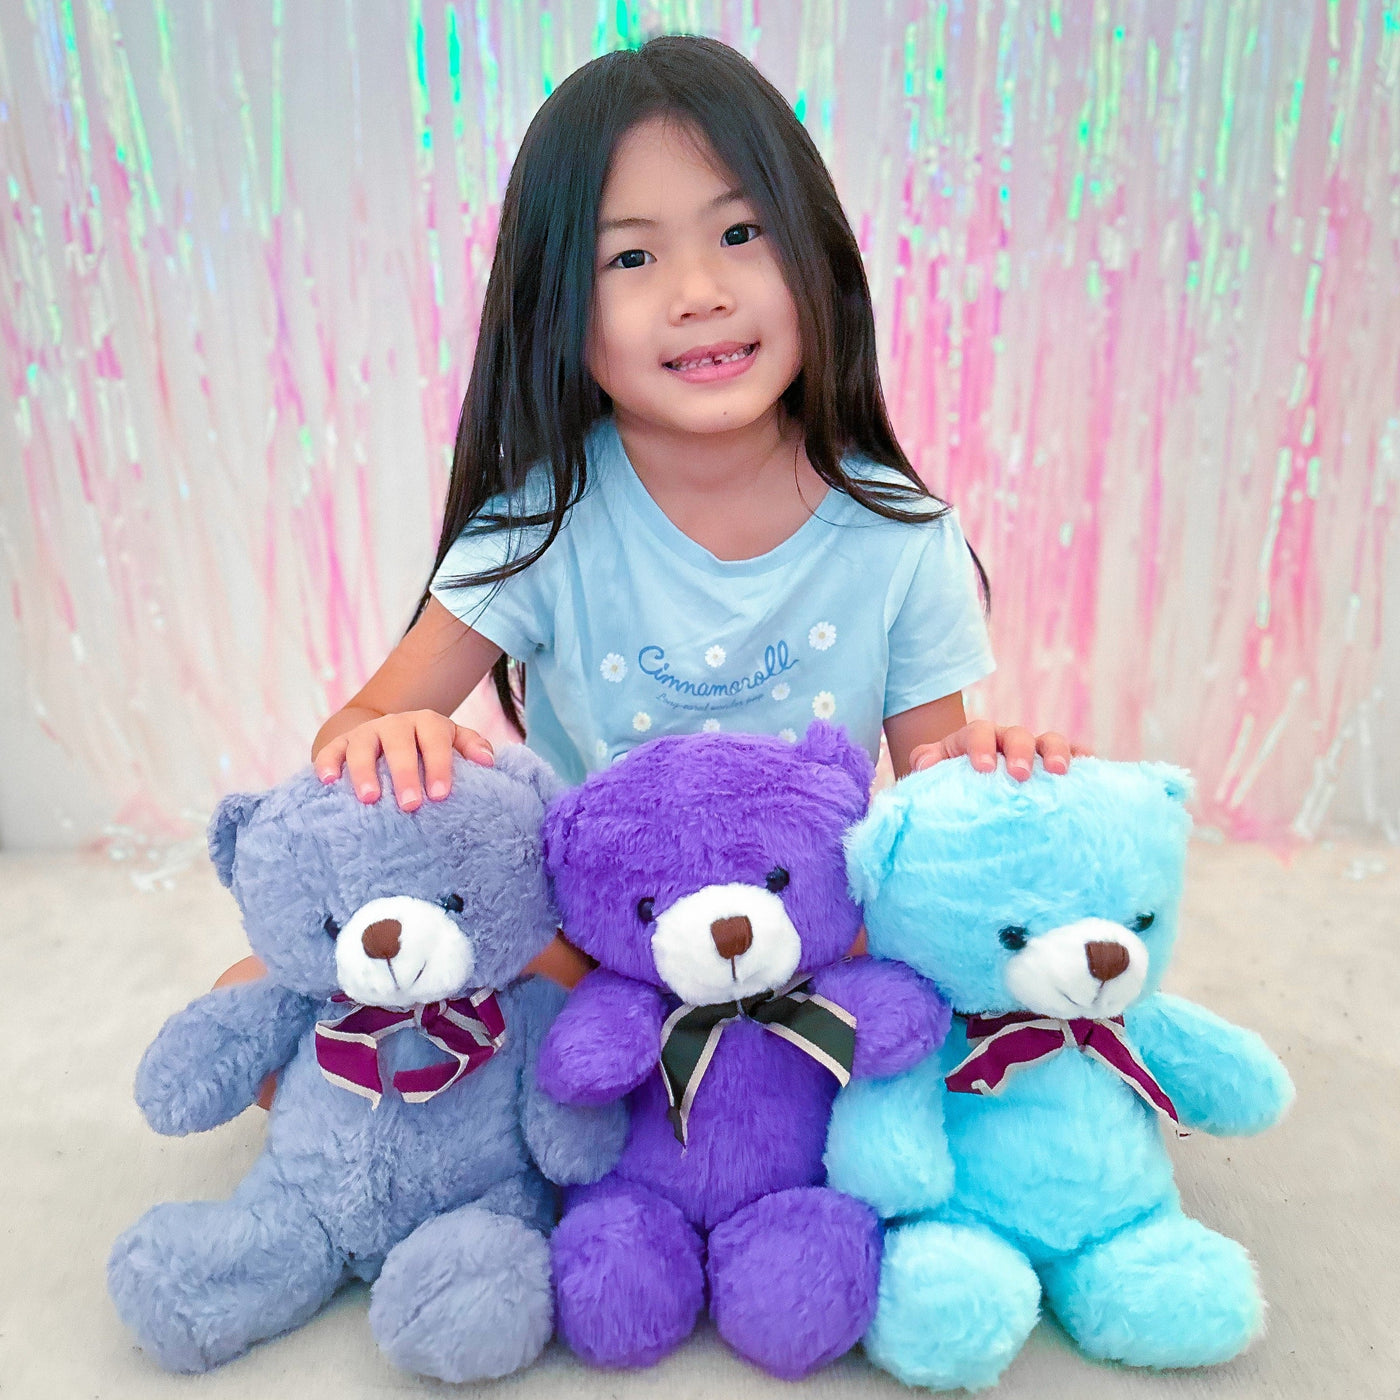 MorisMos 3-Pack Teddy Bear Stuffed Toys, 12 inches